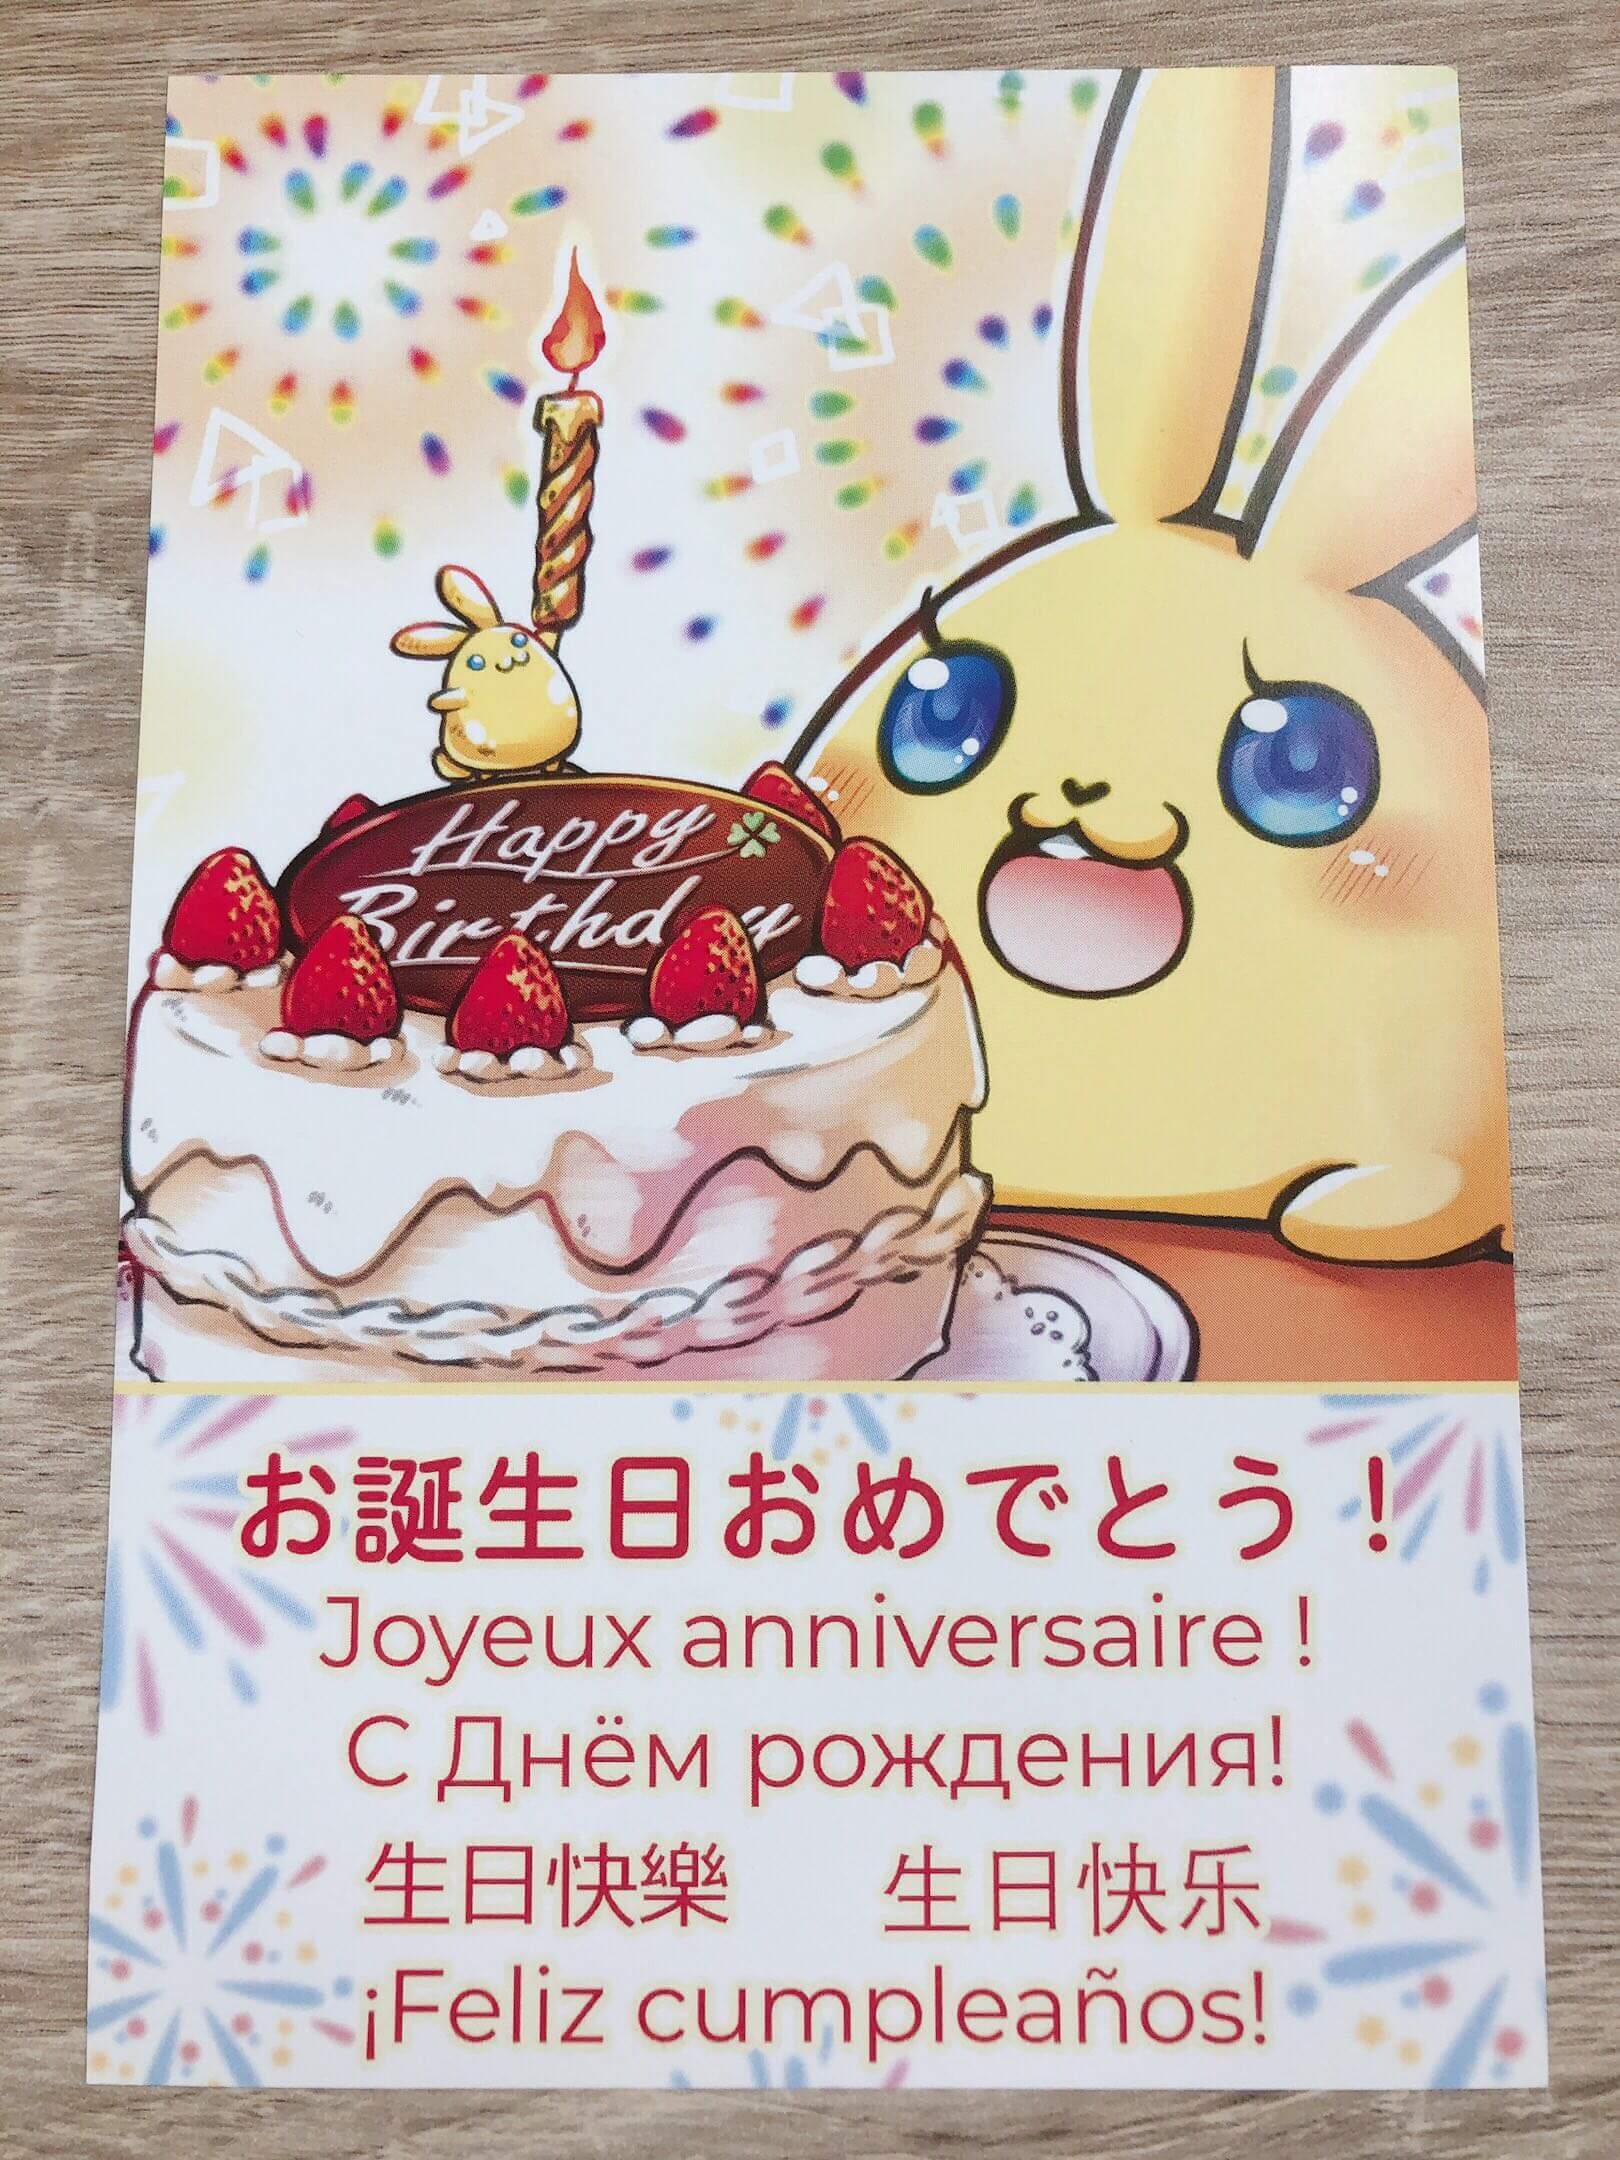 ZenPop Birthday Card Featuring Luna, ZenPop Mascot and Star of Full Moon Magic